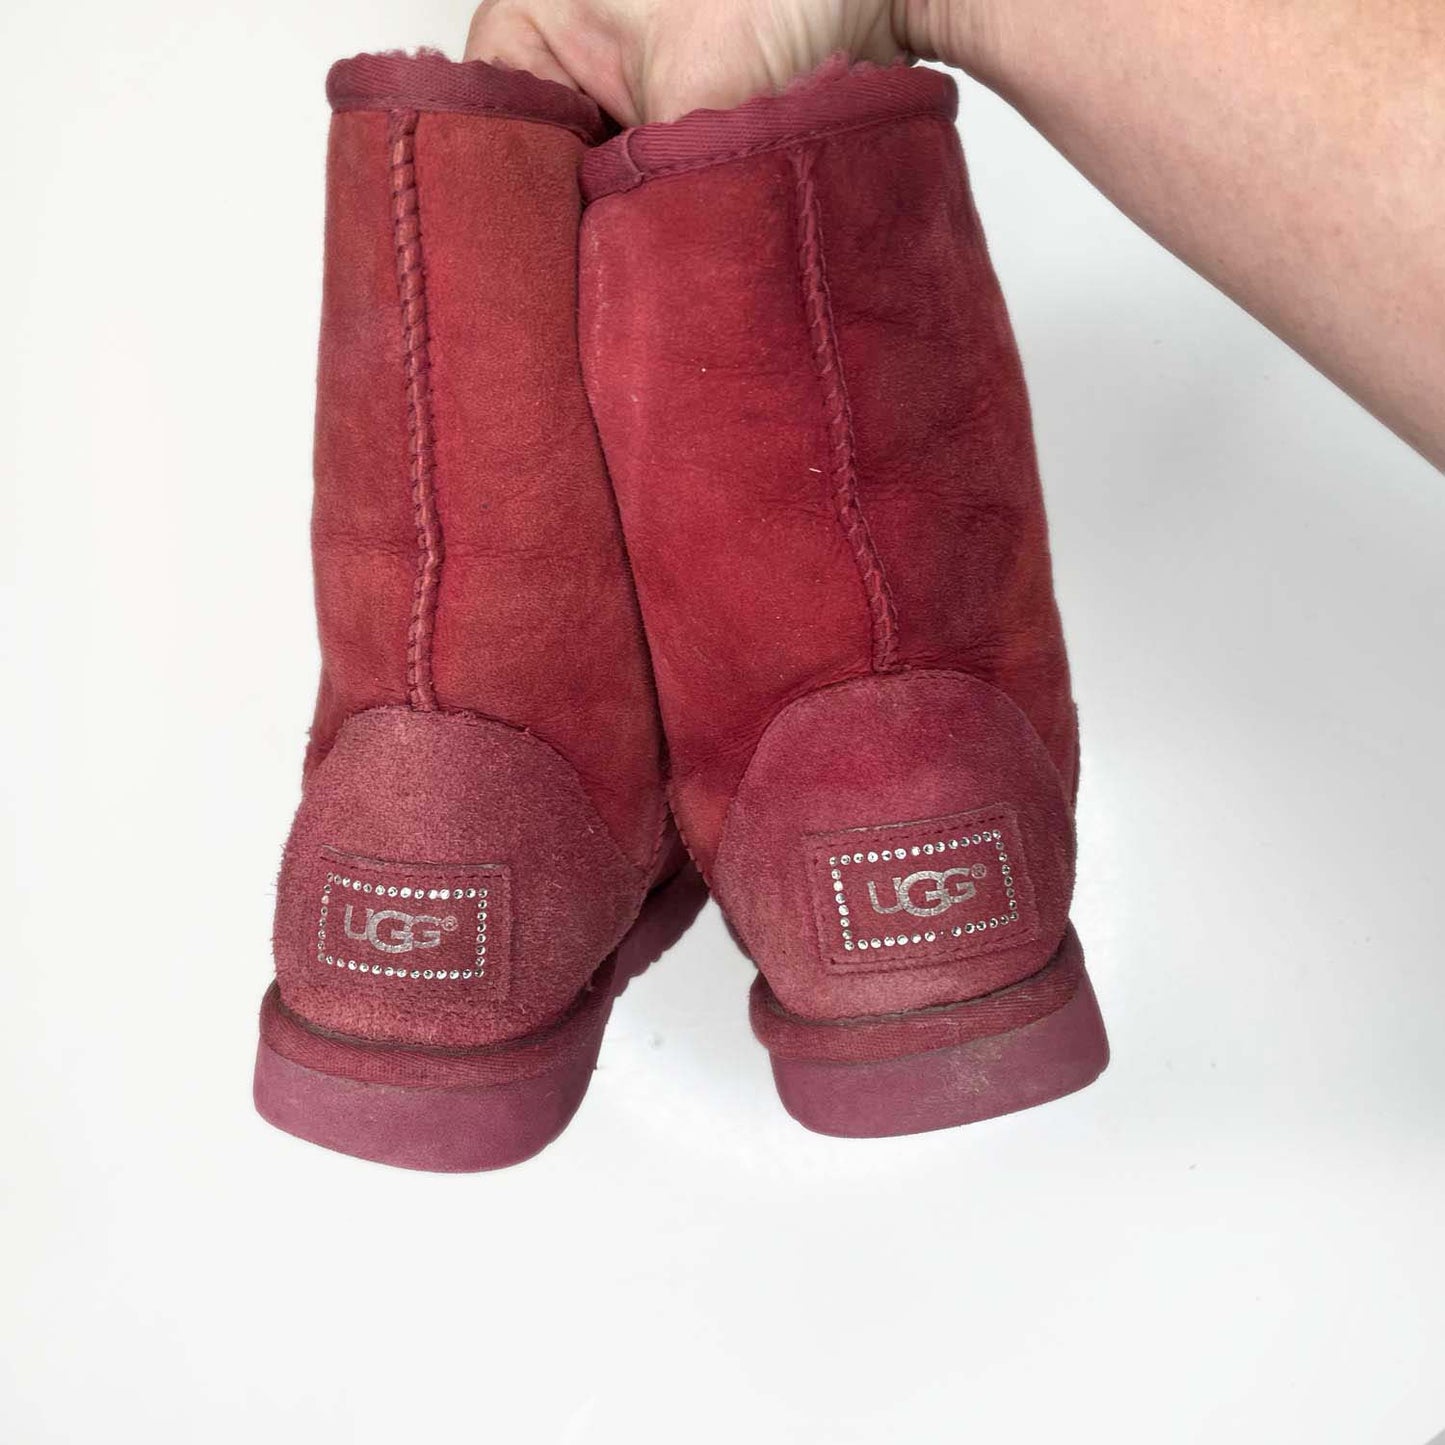 ugg classic short bling sheepskin boot in sangria - size 6